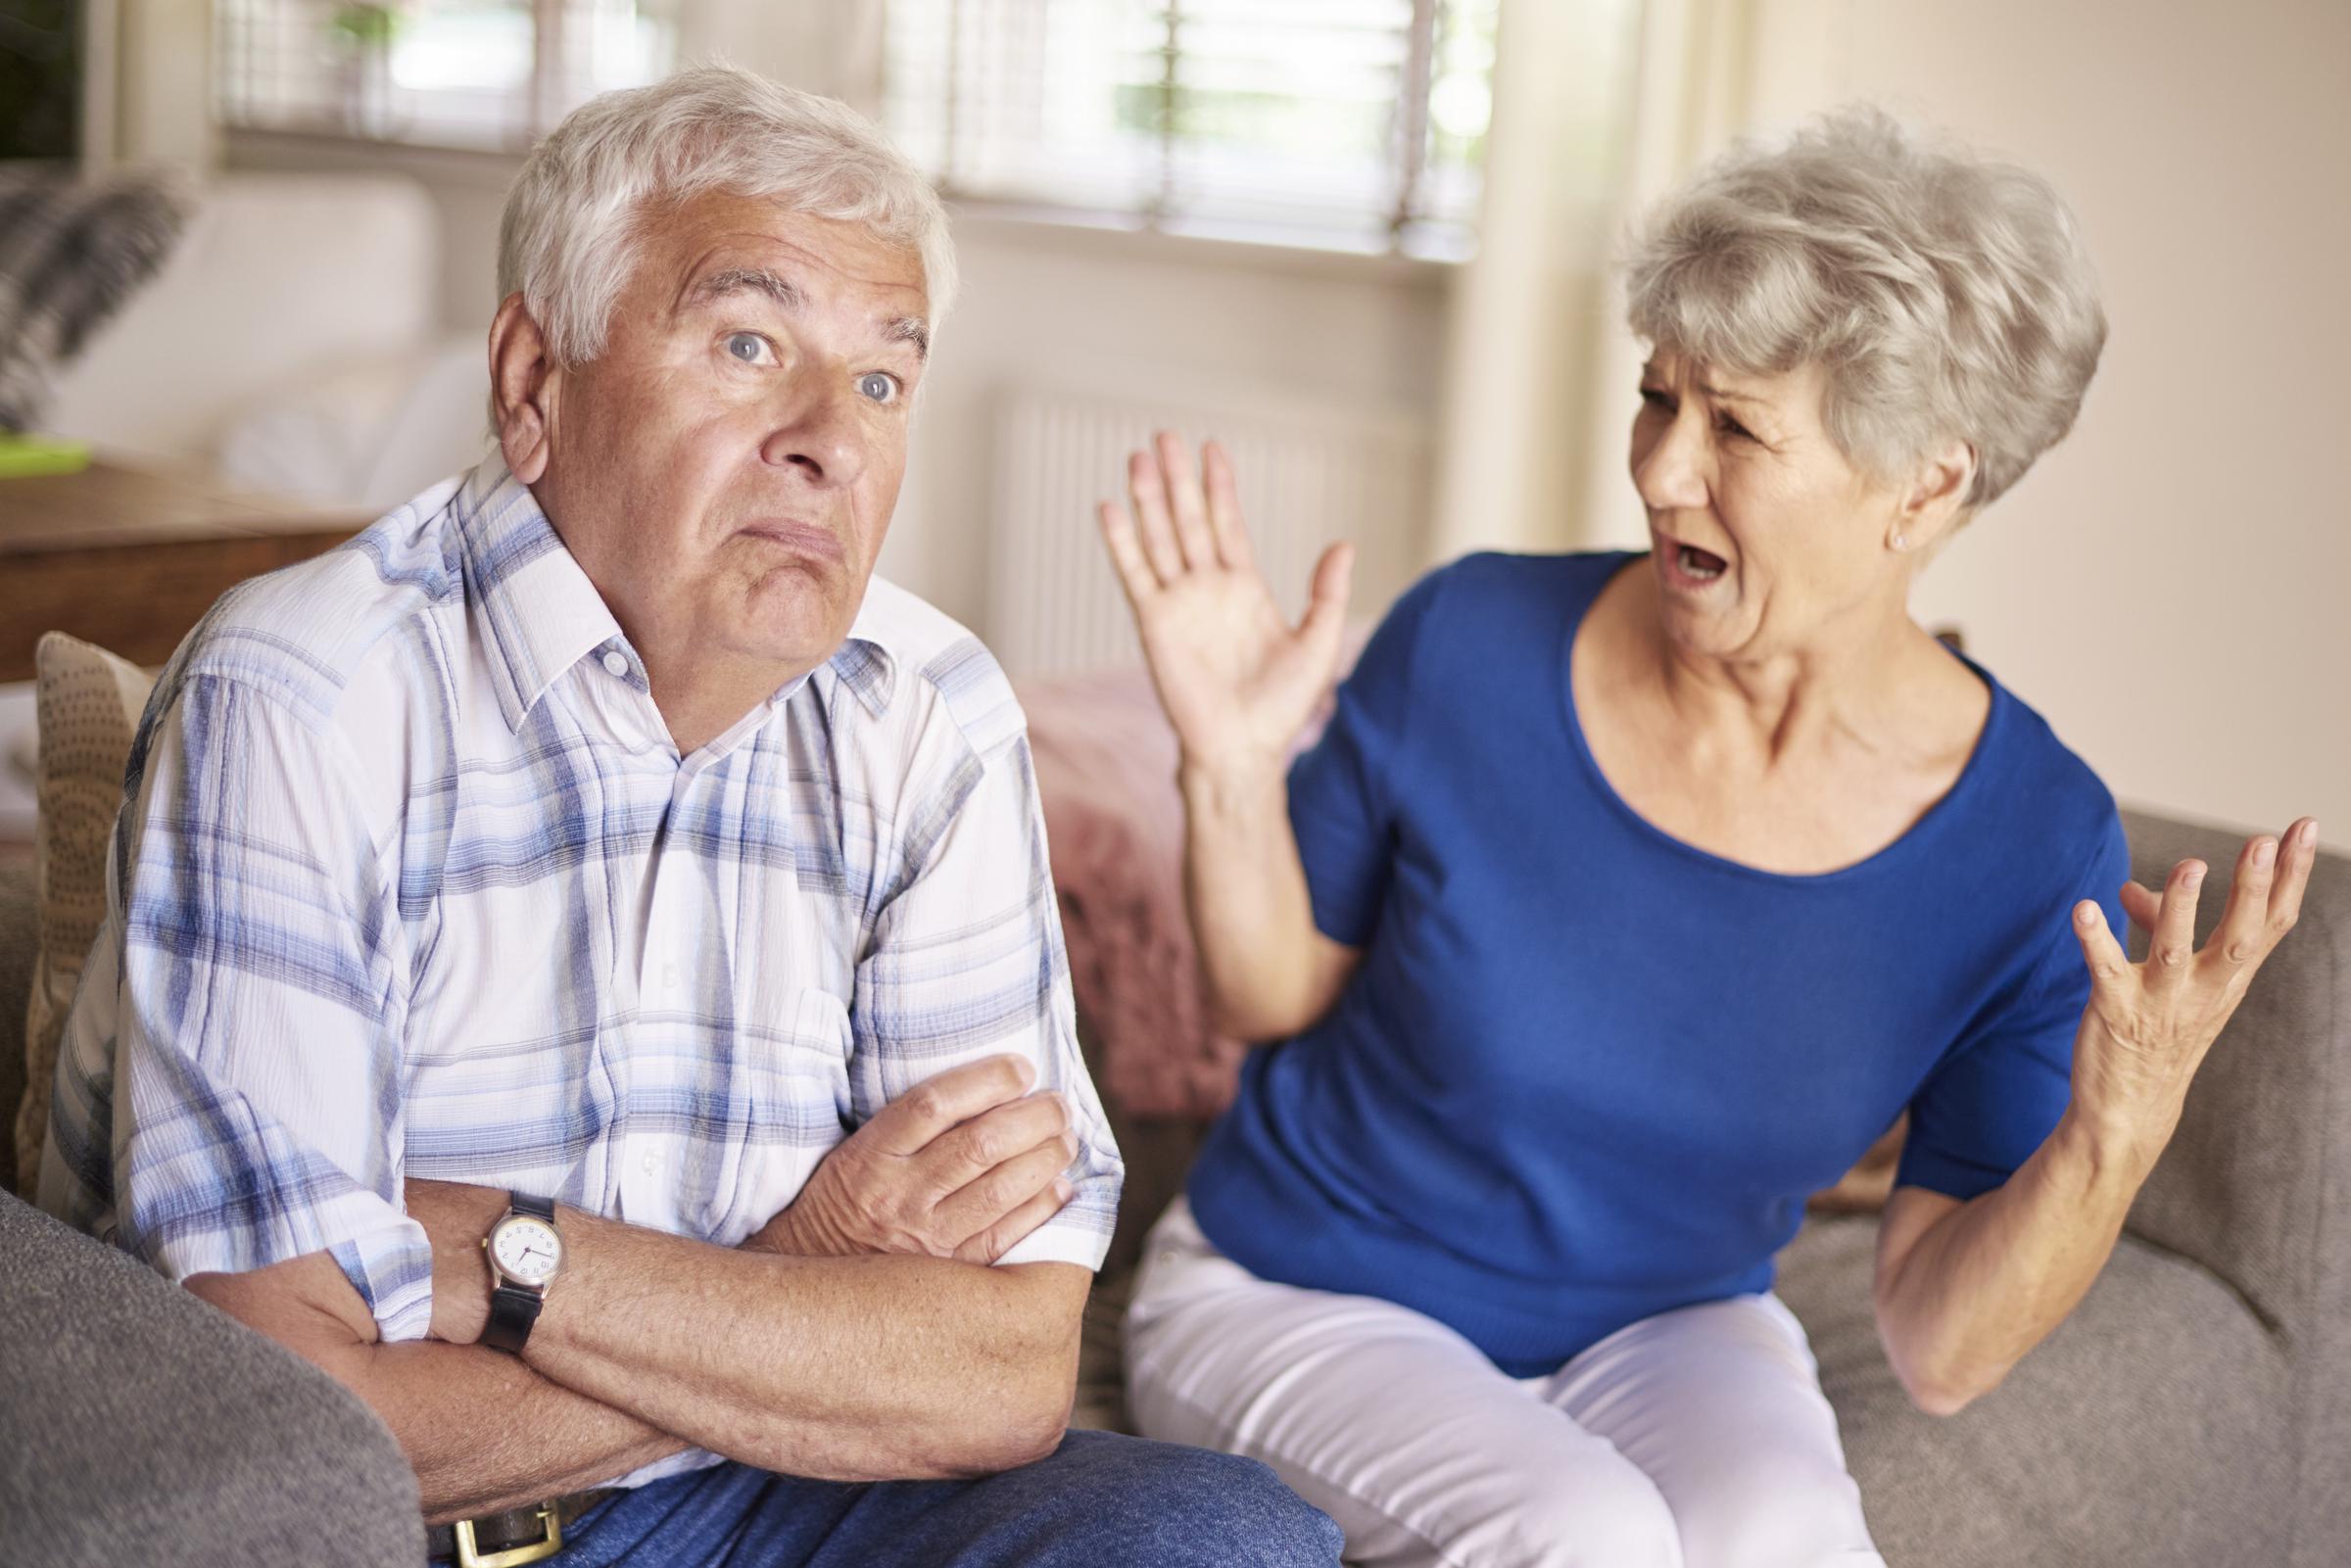 An elderly couple arguing | Source: Freepik